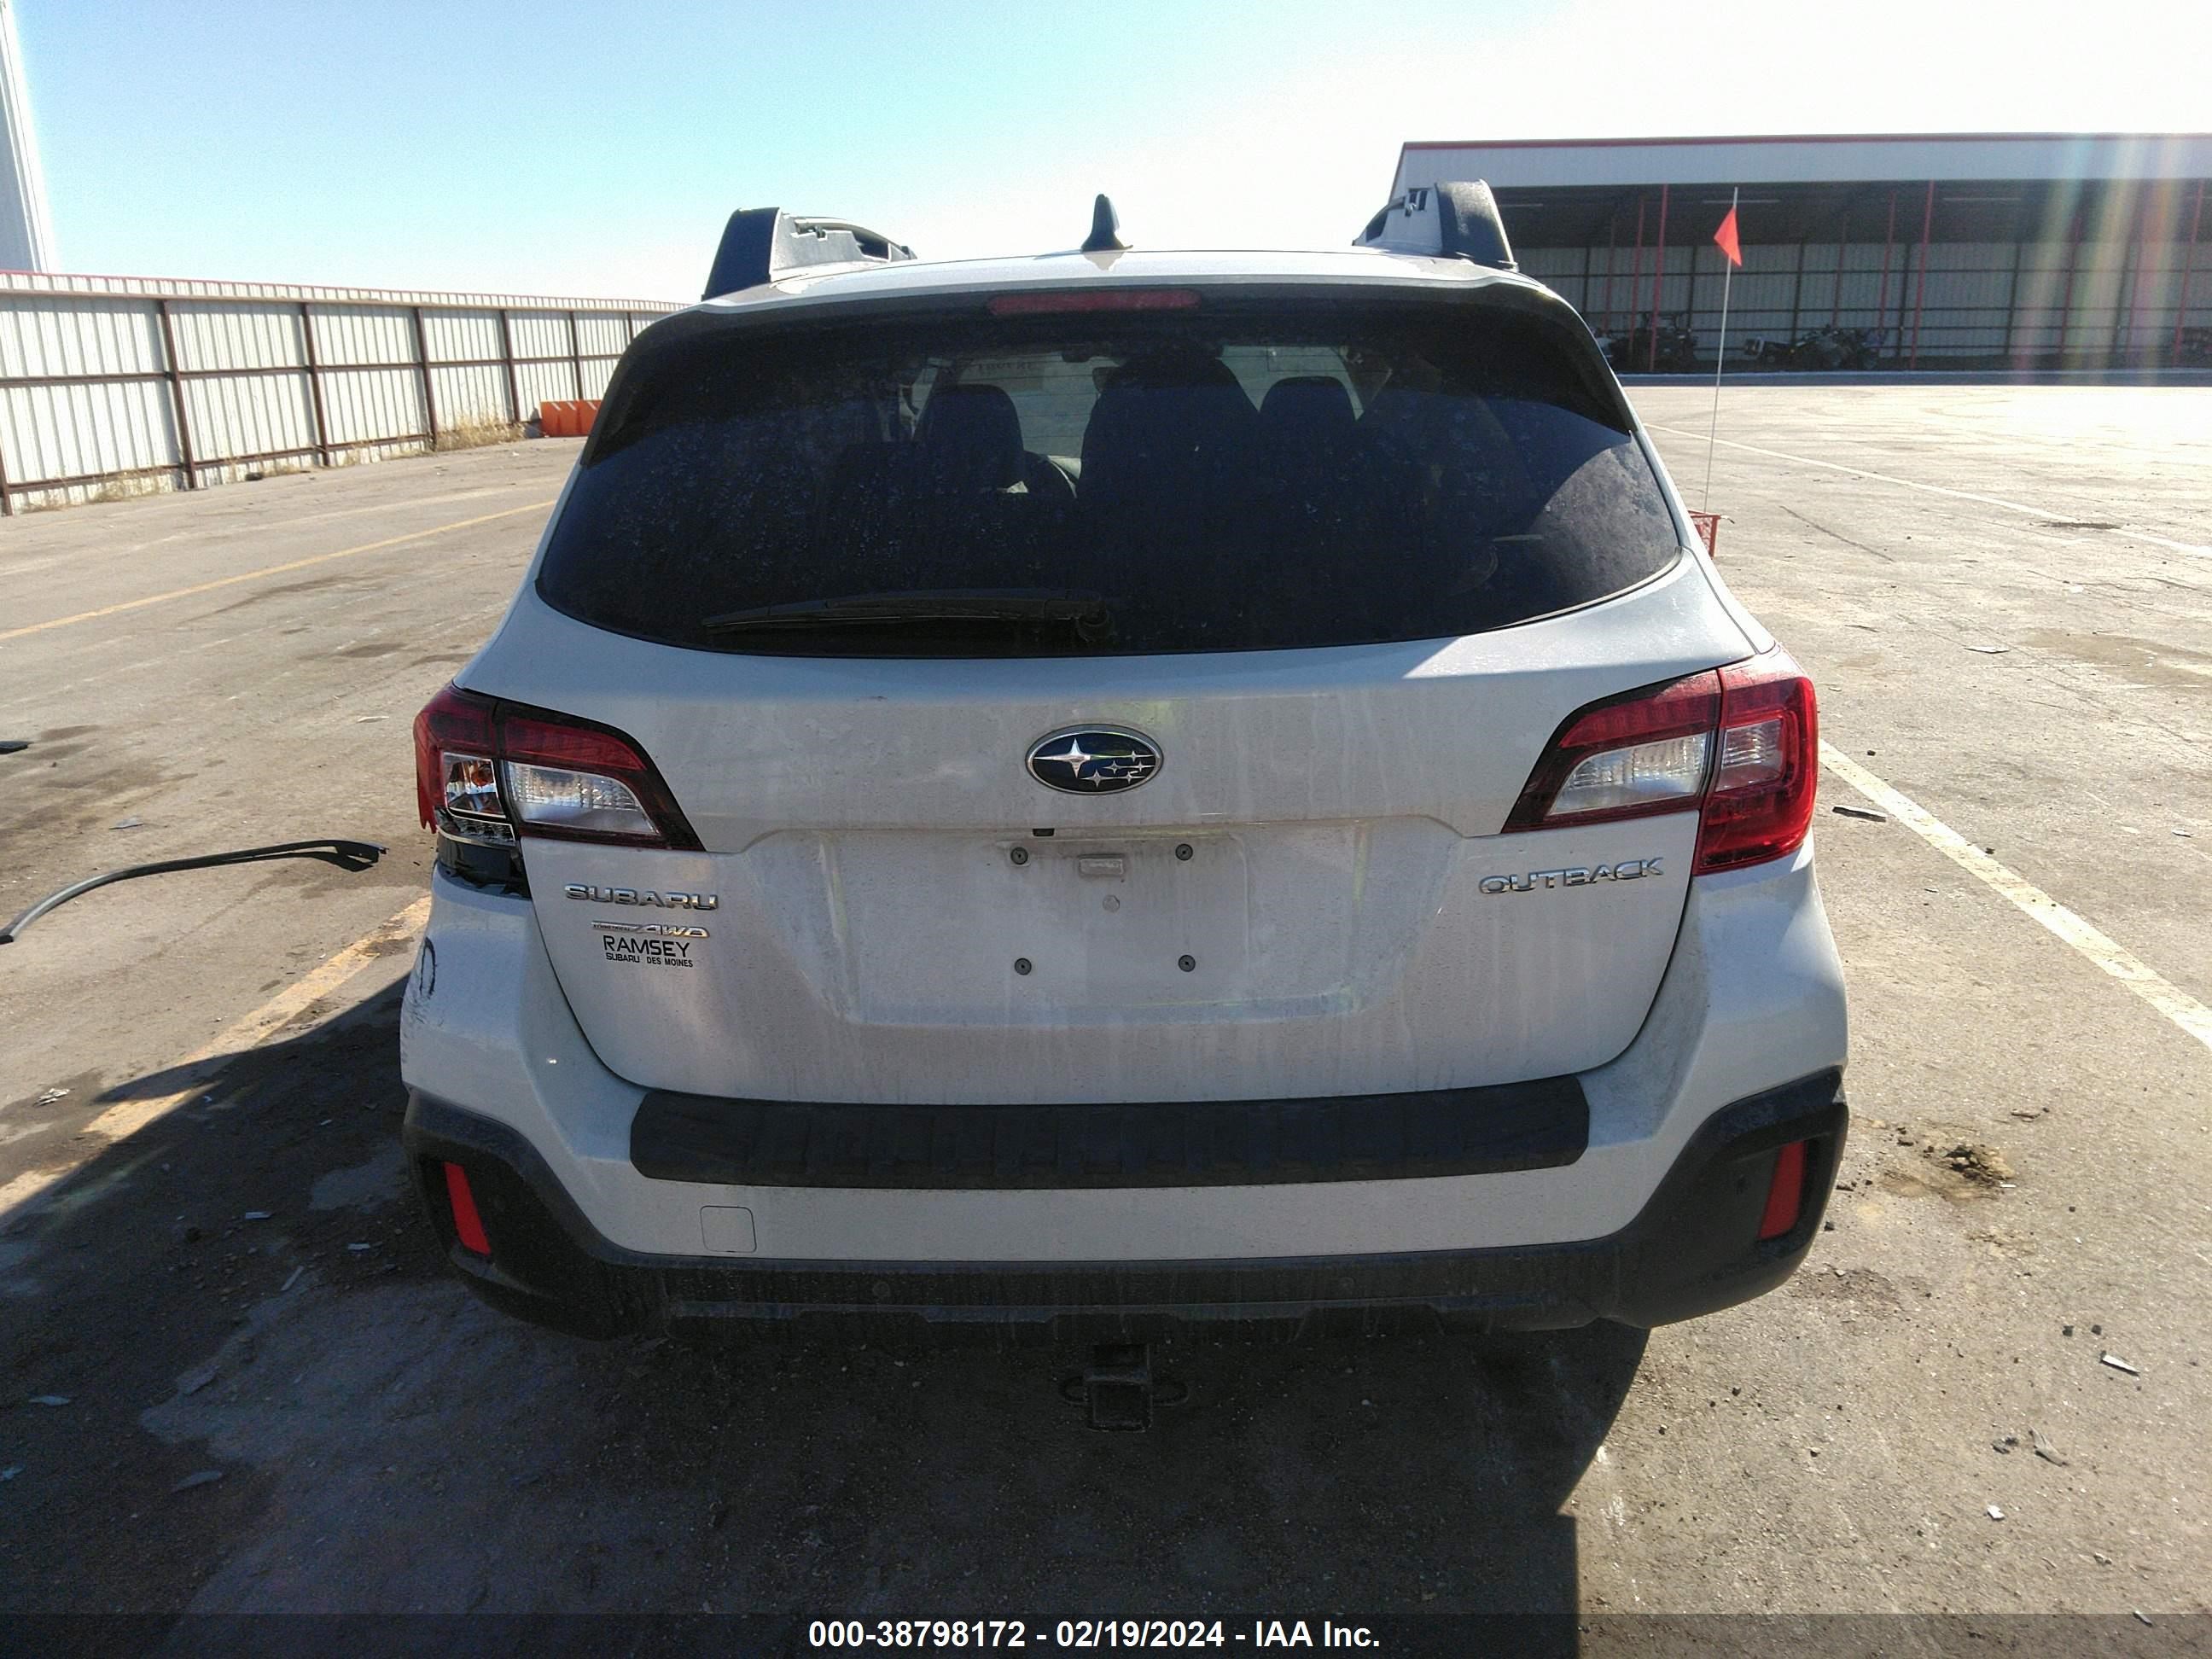 2019 Subaru Outback 2.5I Limited vin: 4S4BSANC1K3346924